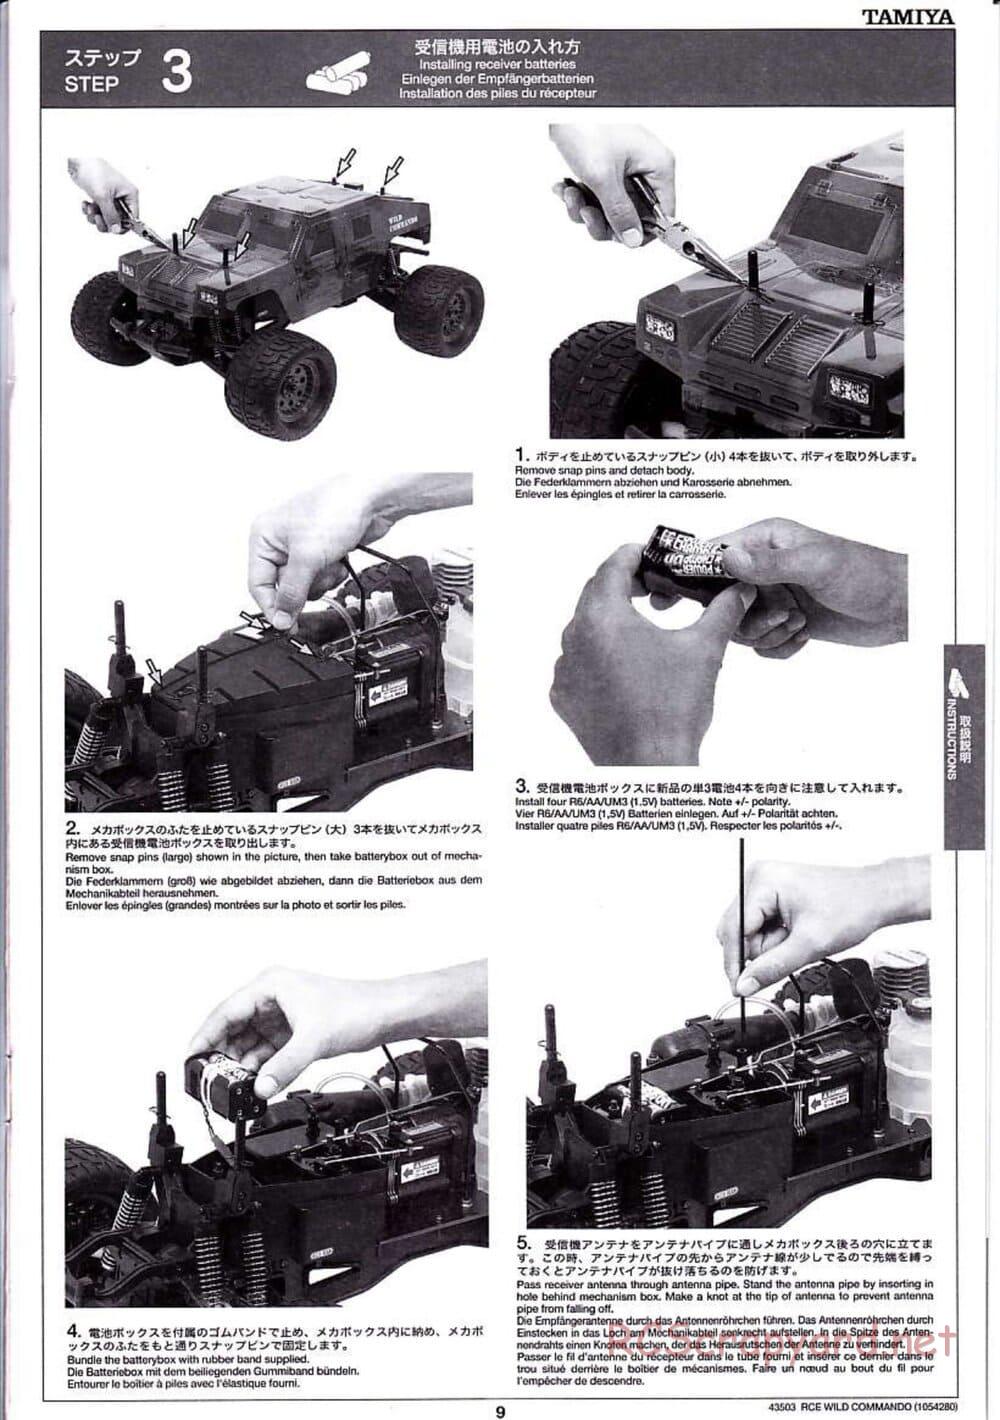 Tamiya - Wild Commando - TGM-02 Chassis - Manual - Page 9